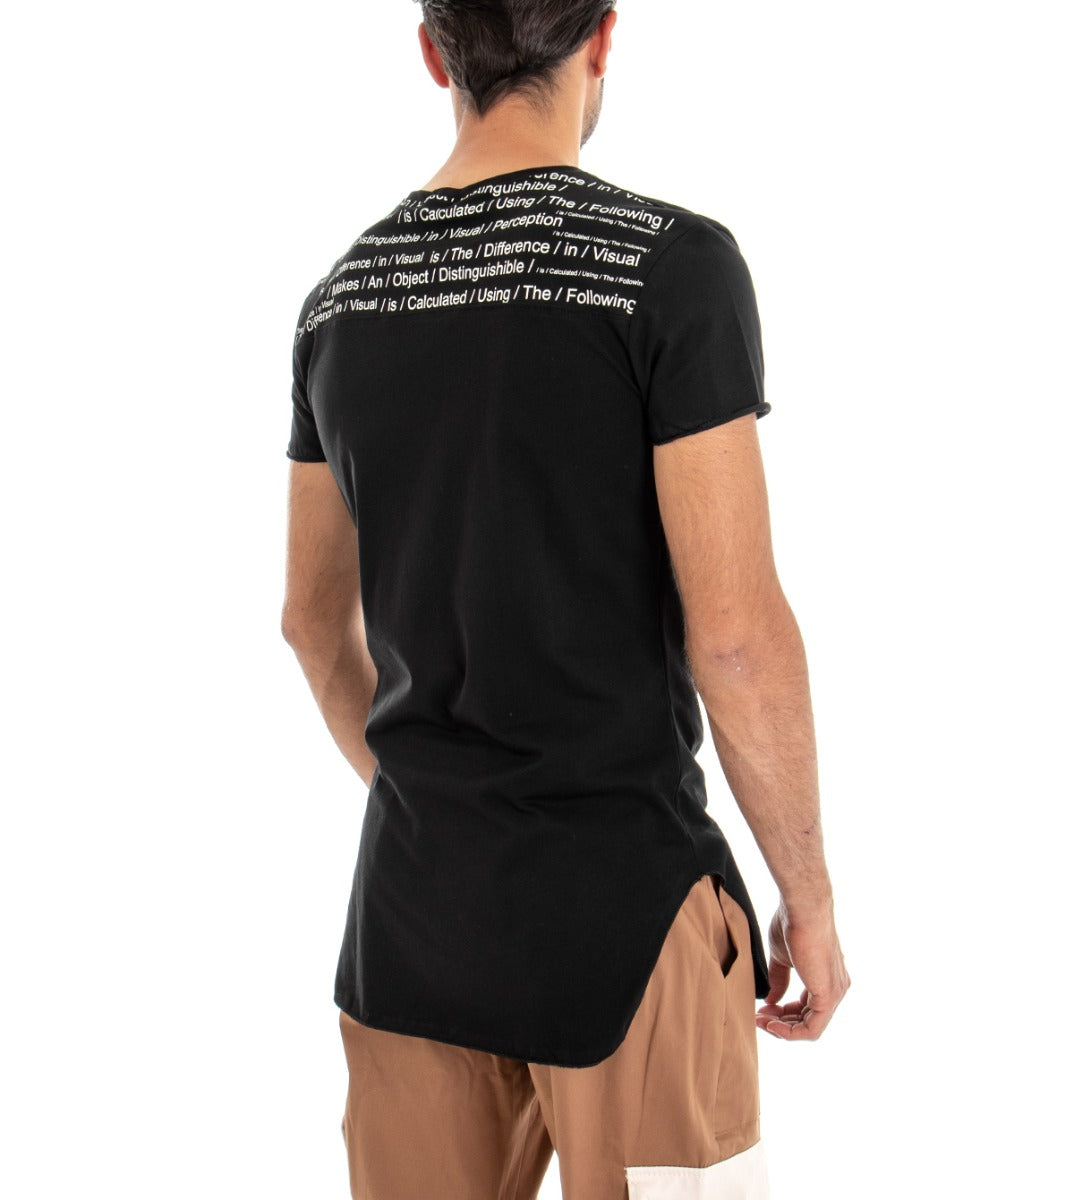 Men's T-shirt Short Sleeve Shirt Written Print Light Cotton Fabric Solid Color Black GIOSAL